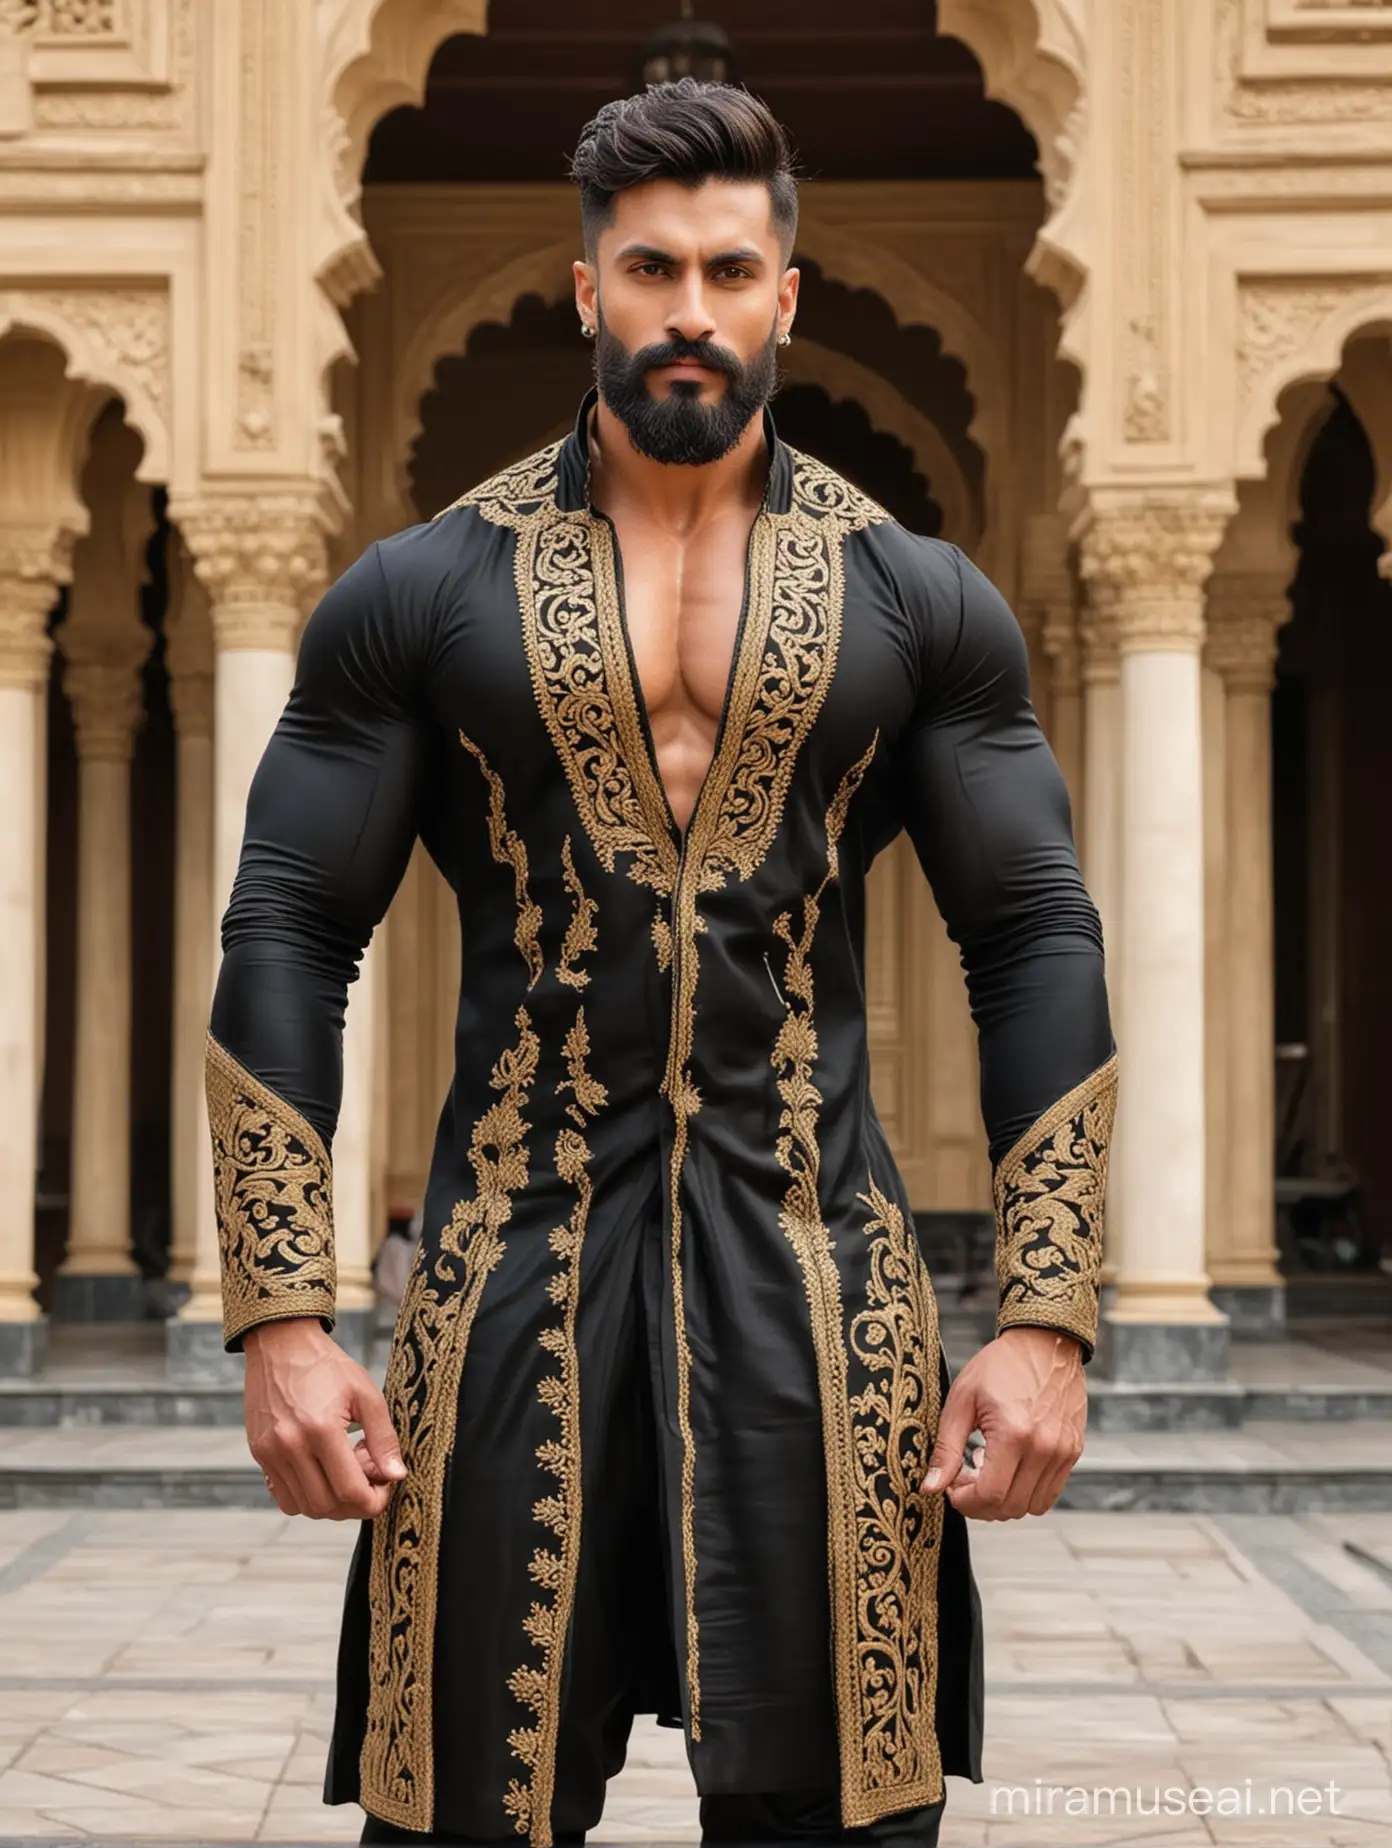 Elegant Bodybuilder in Black and Golden Sherwani Posing Outside Palace